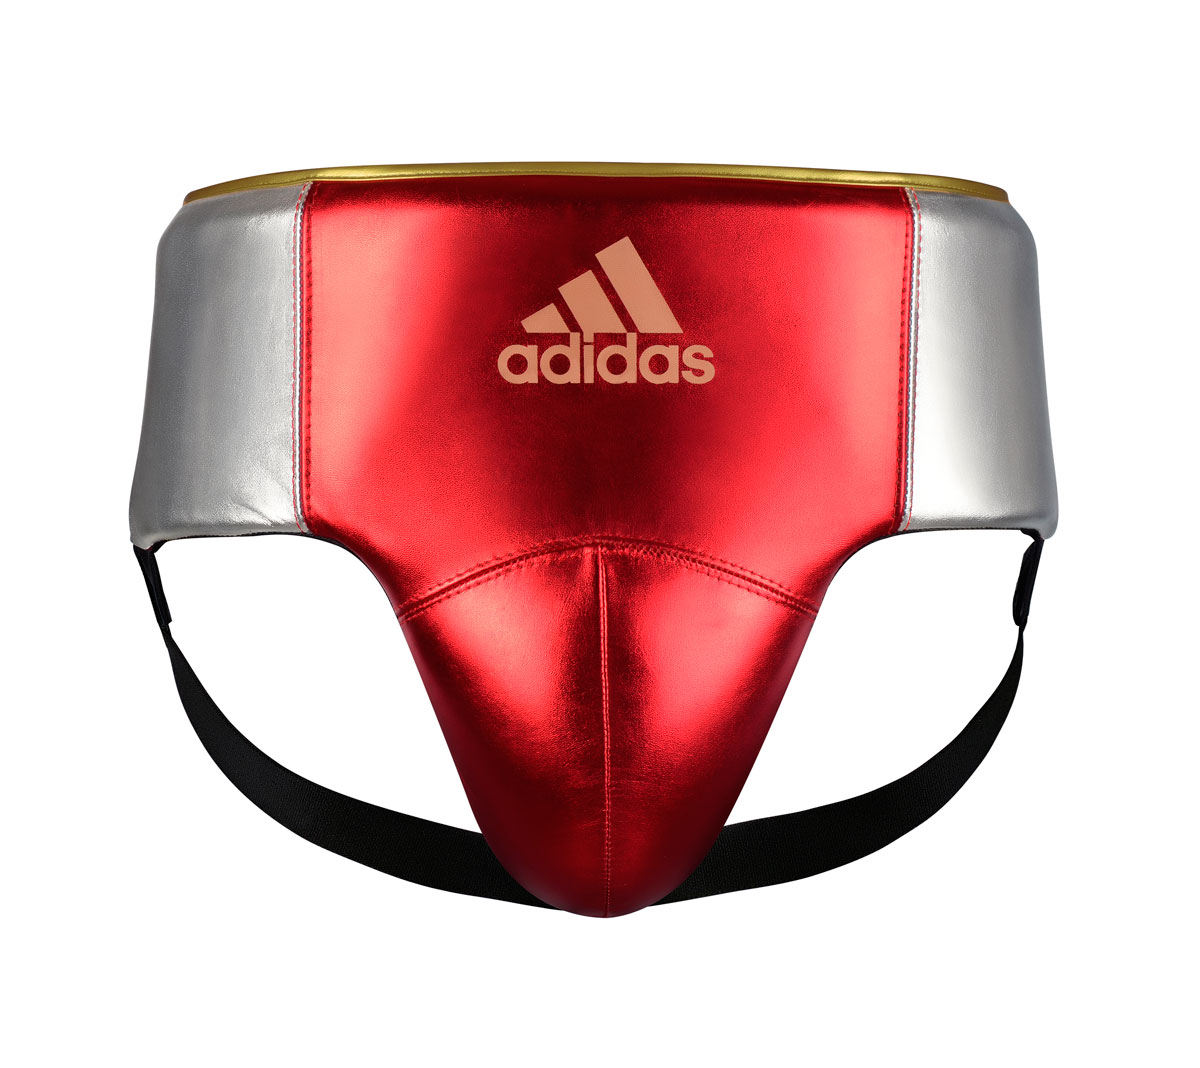 фото Защита паха мужская adidas adistar pro мetallic groin guard красно-серебристо-золотая